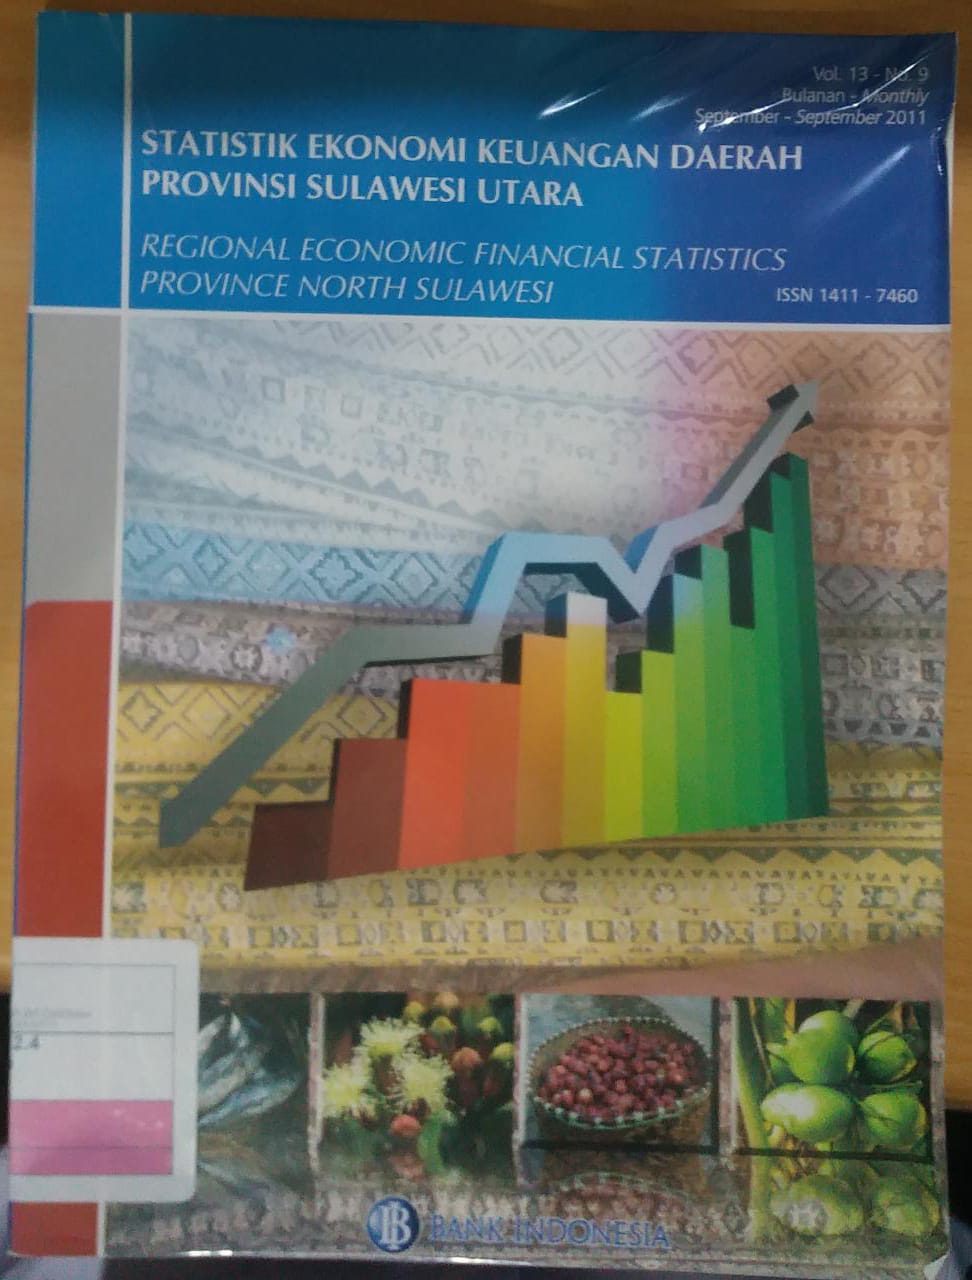 Statistik Ekonomi Keuangan Daerah Provinsi Sulawesi Utara Vol 13 No, 08 = :  Regional Economic Financial Statistics Province North Sulawesi